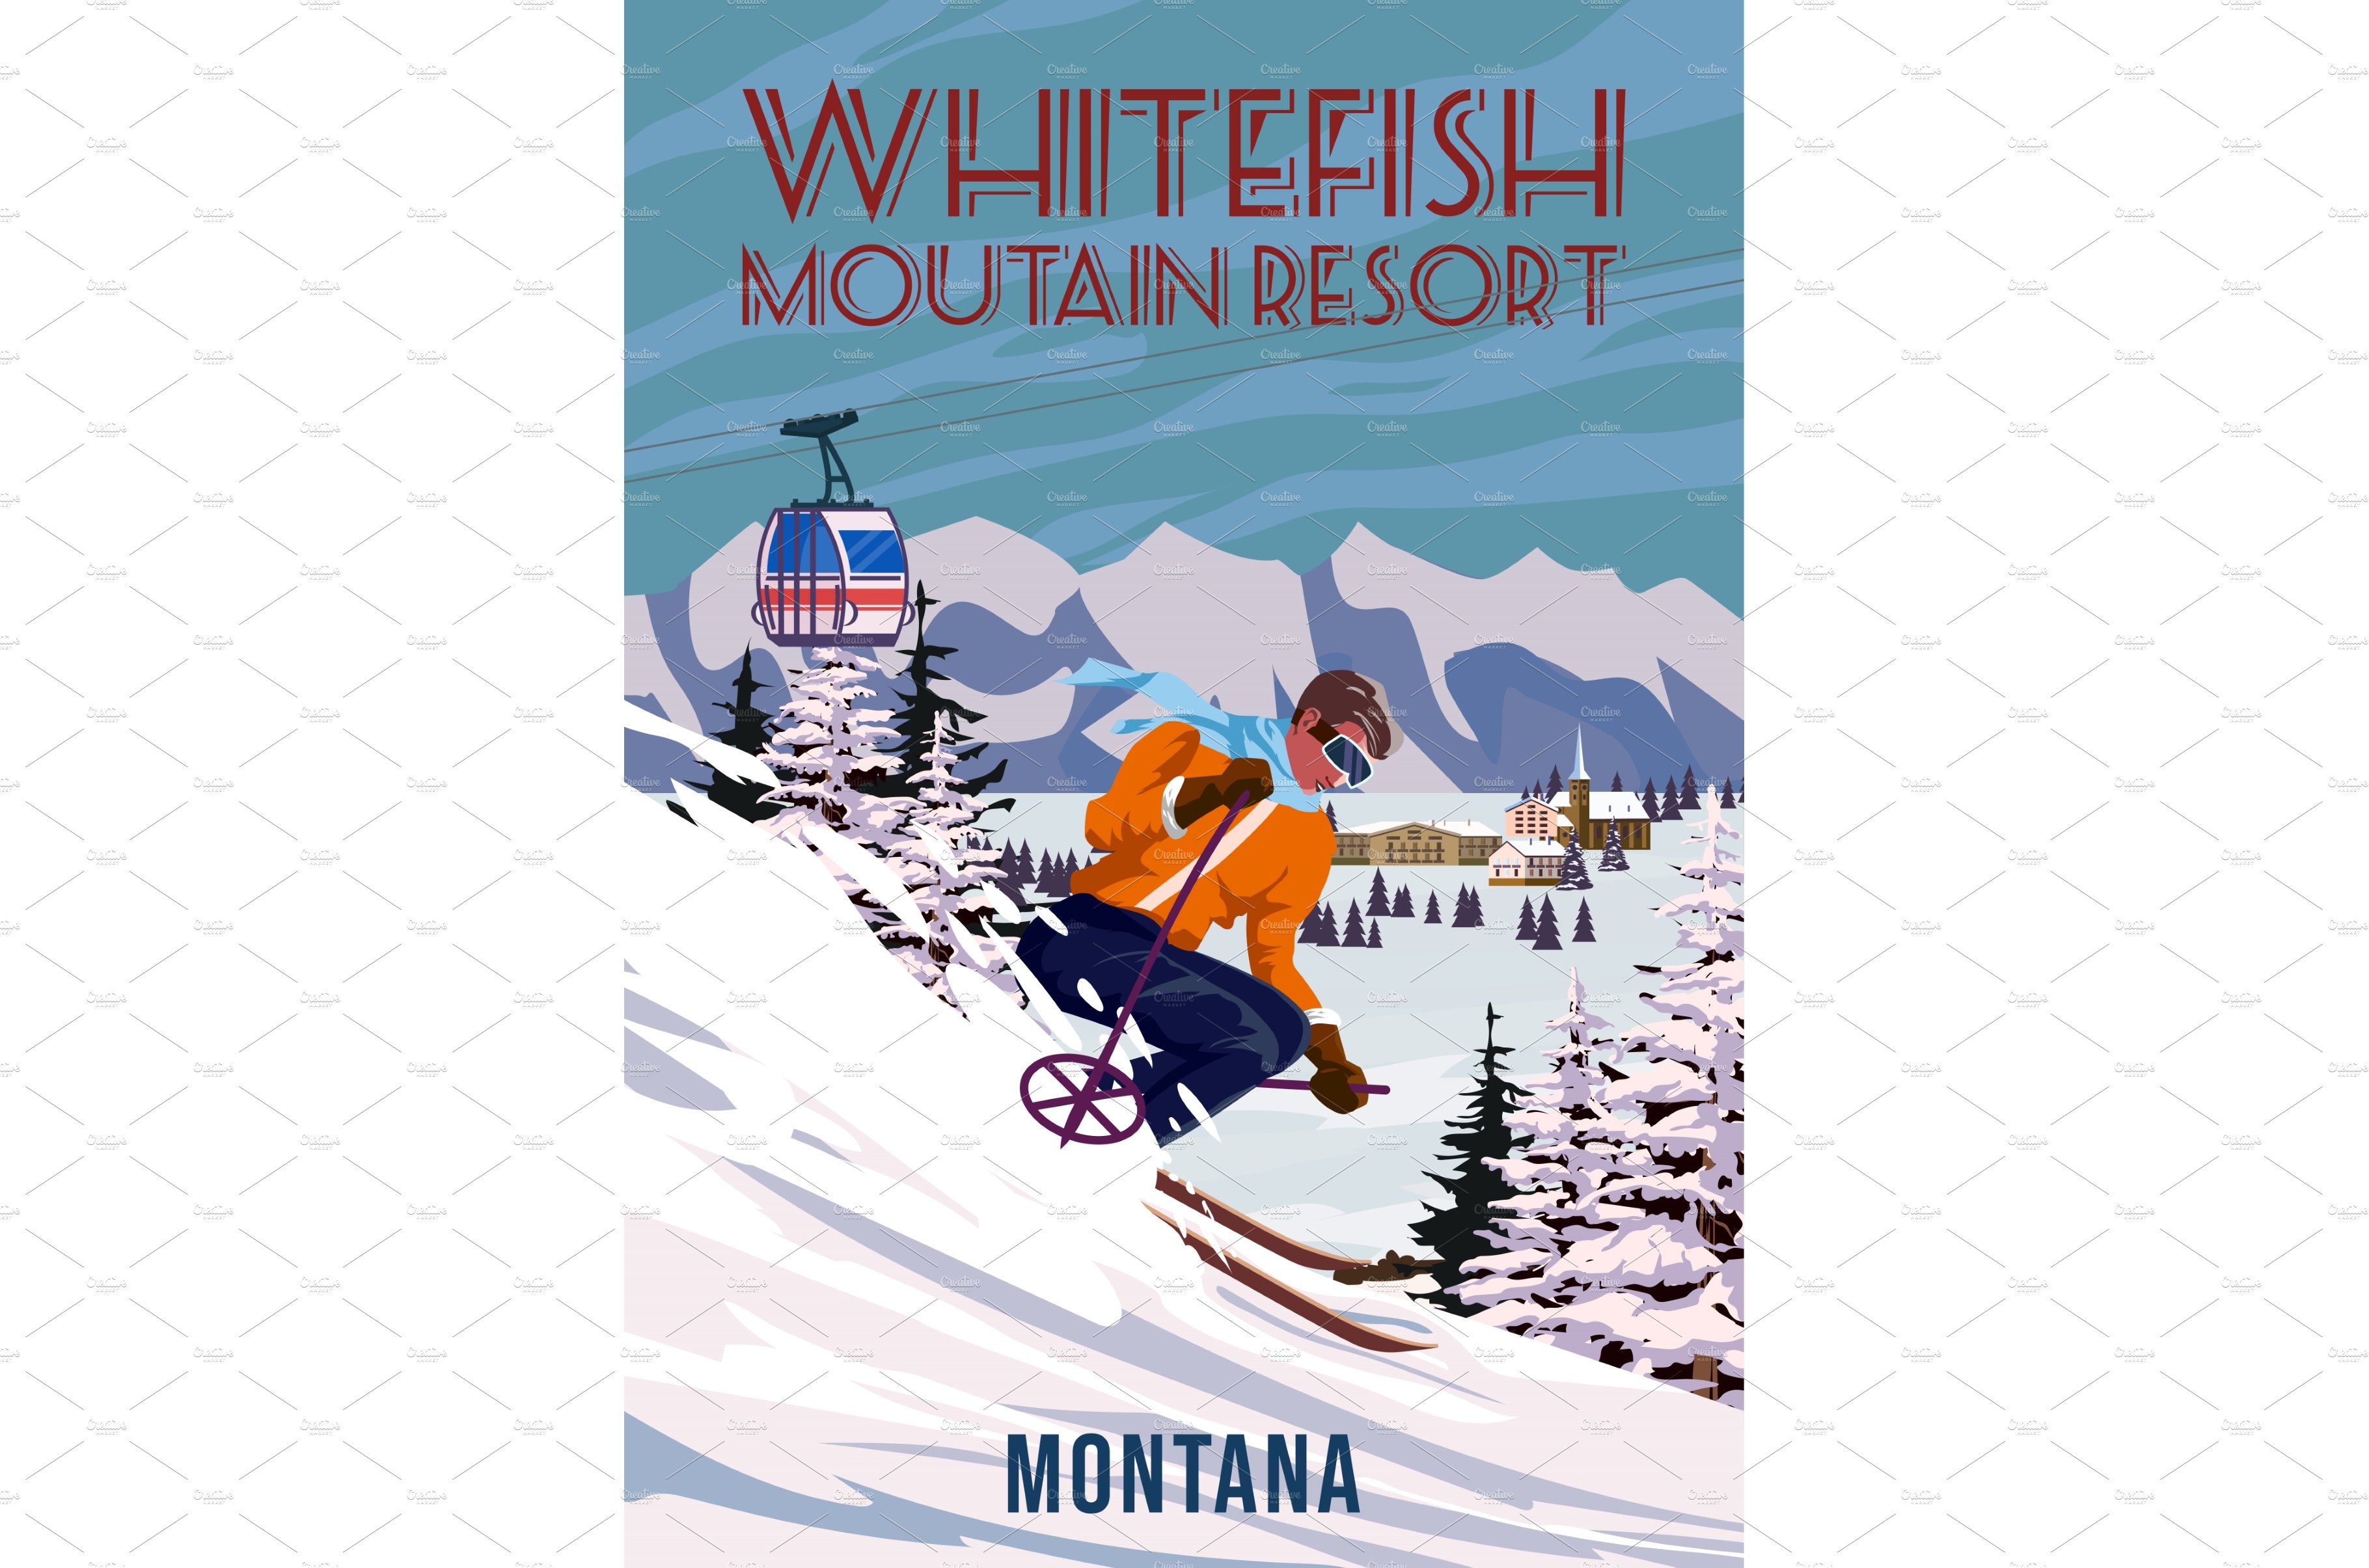 Travel poster Ski Whitefish resort cover image.